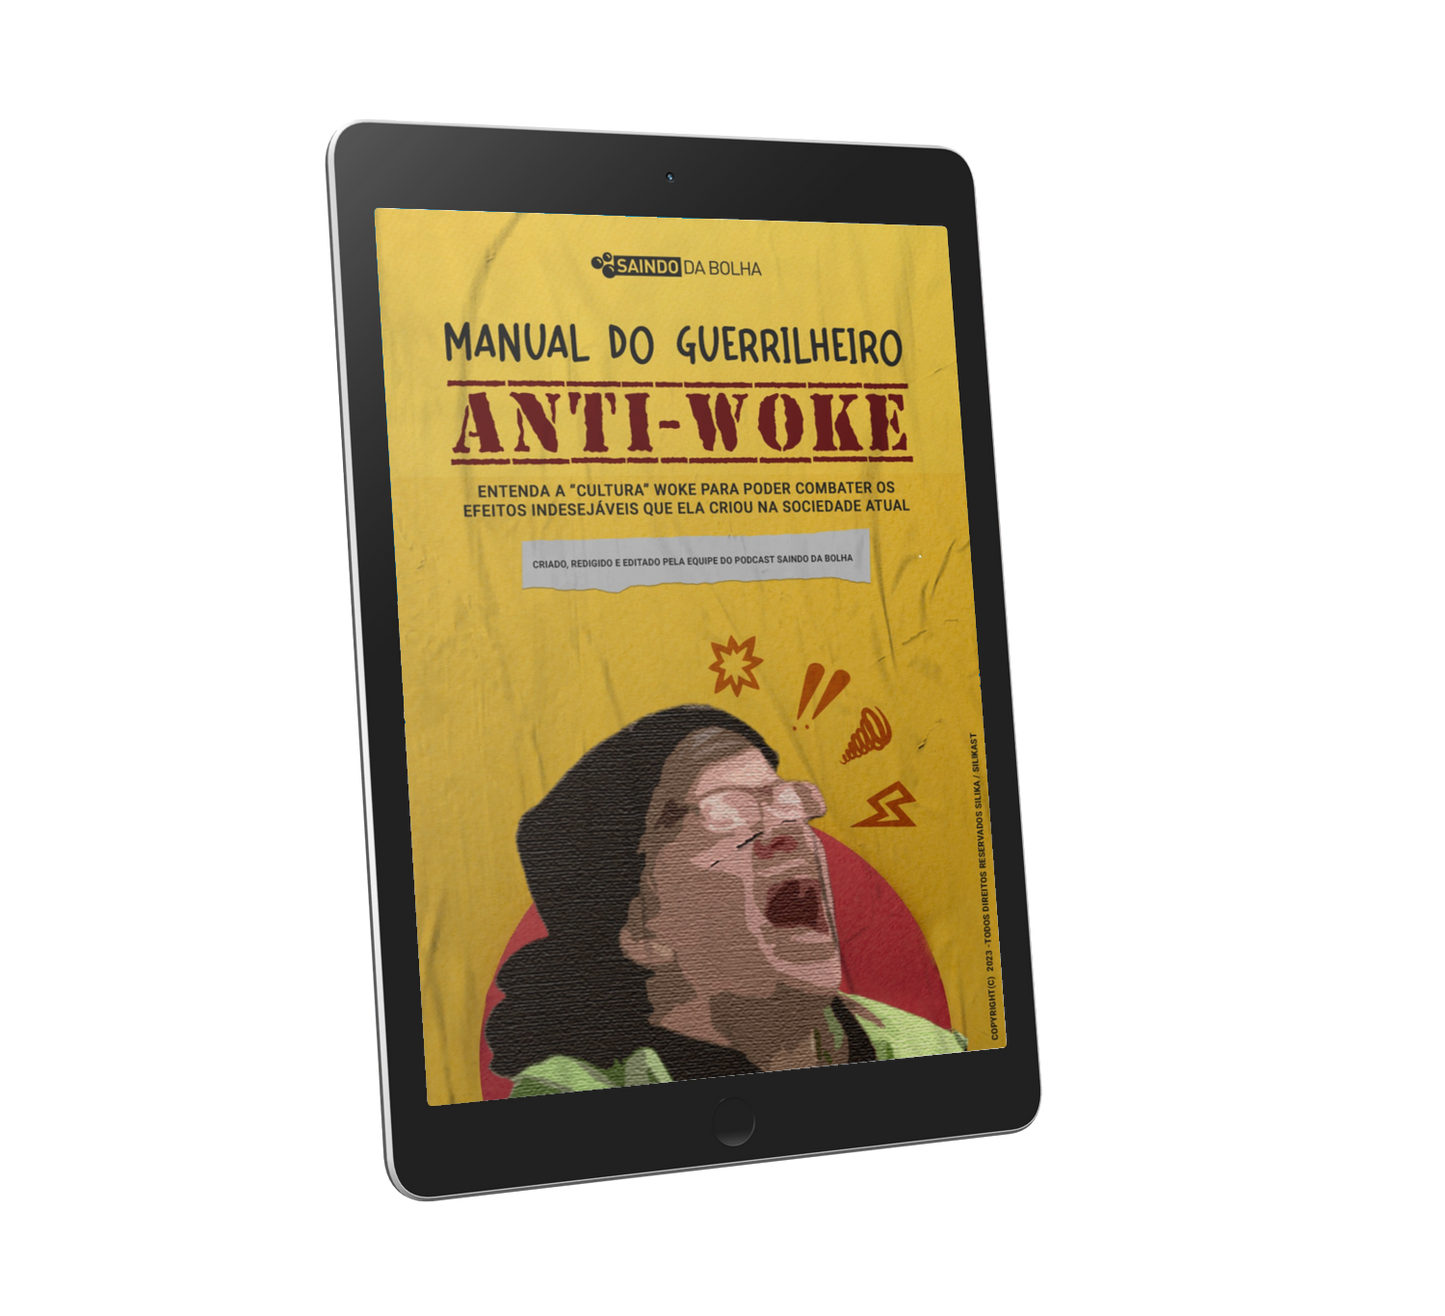 E-Book "Manual do Guerrilheiro Anti-Woke"